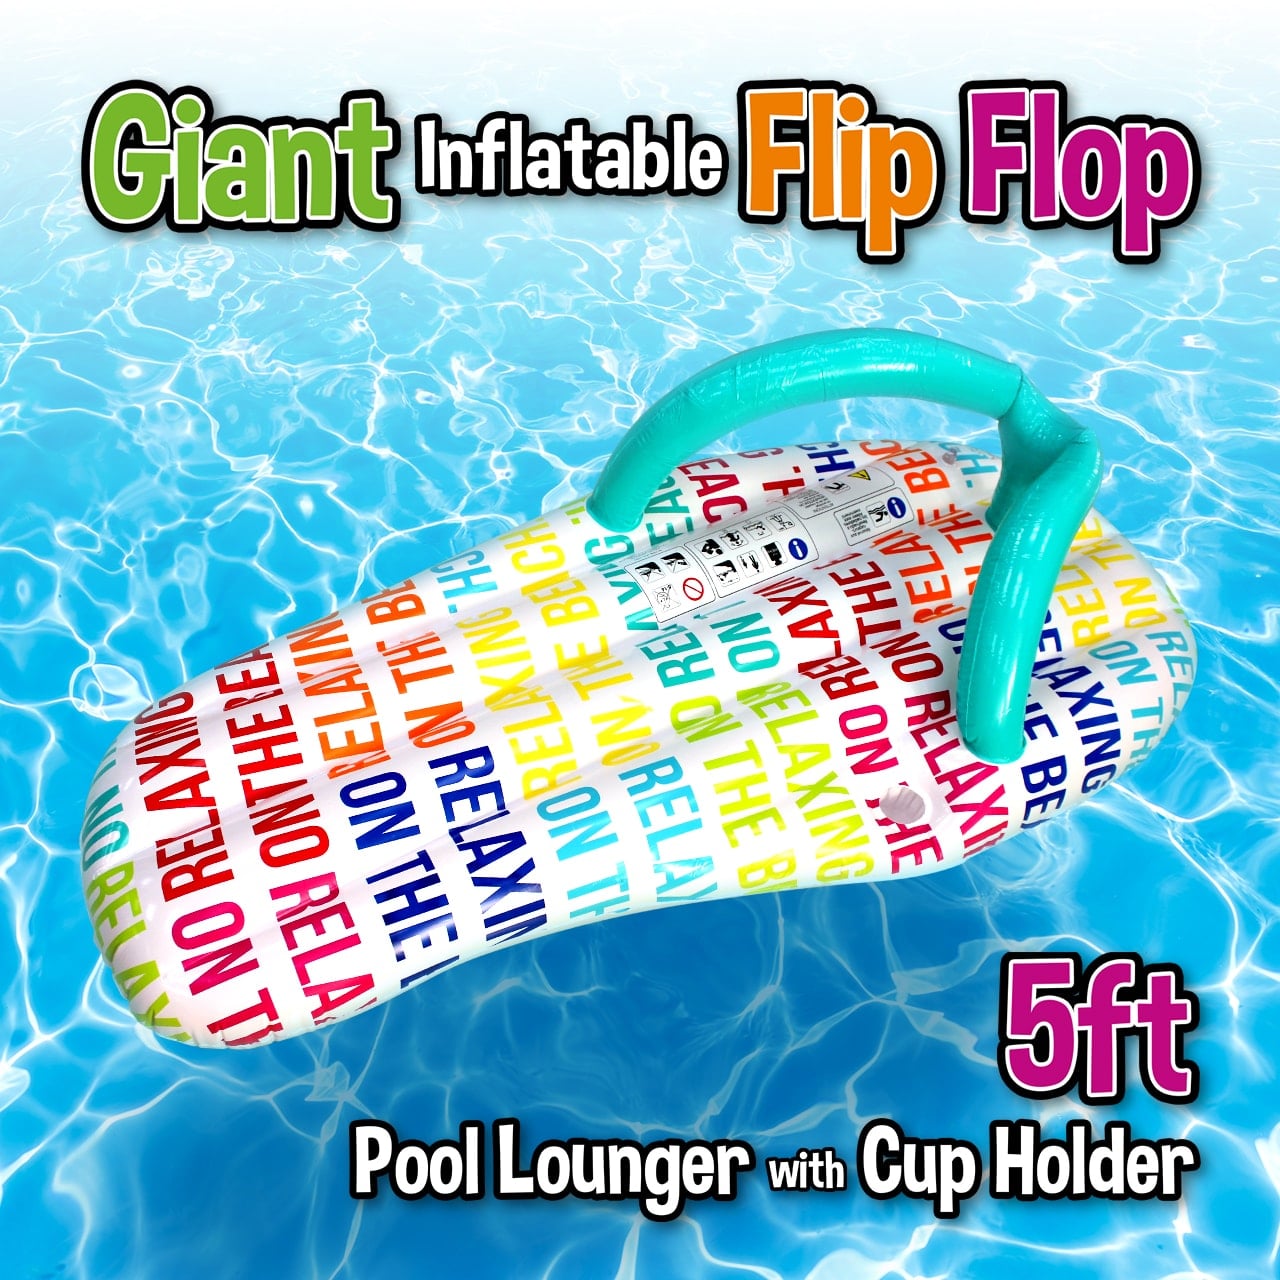 Inflatable-Flip-Flop